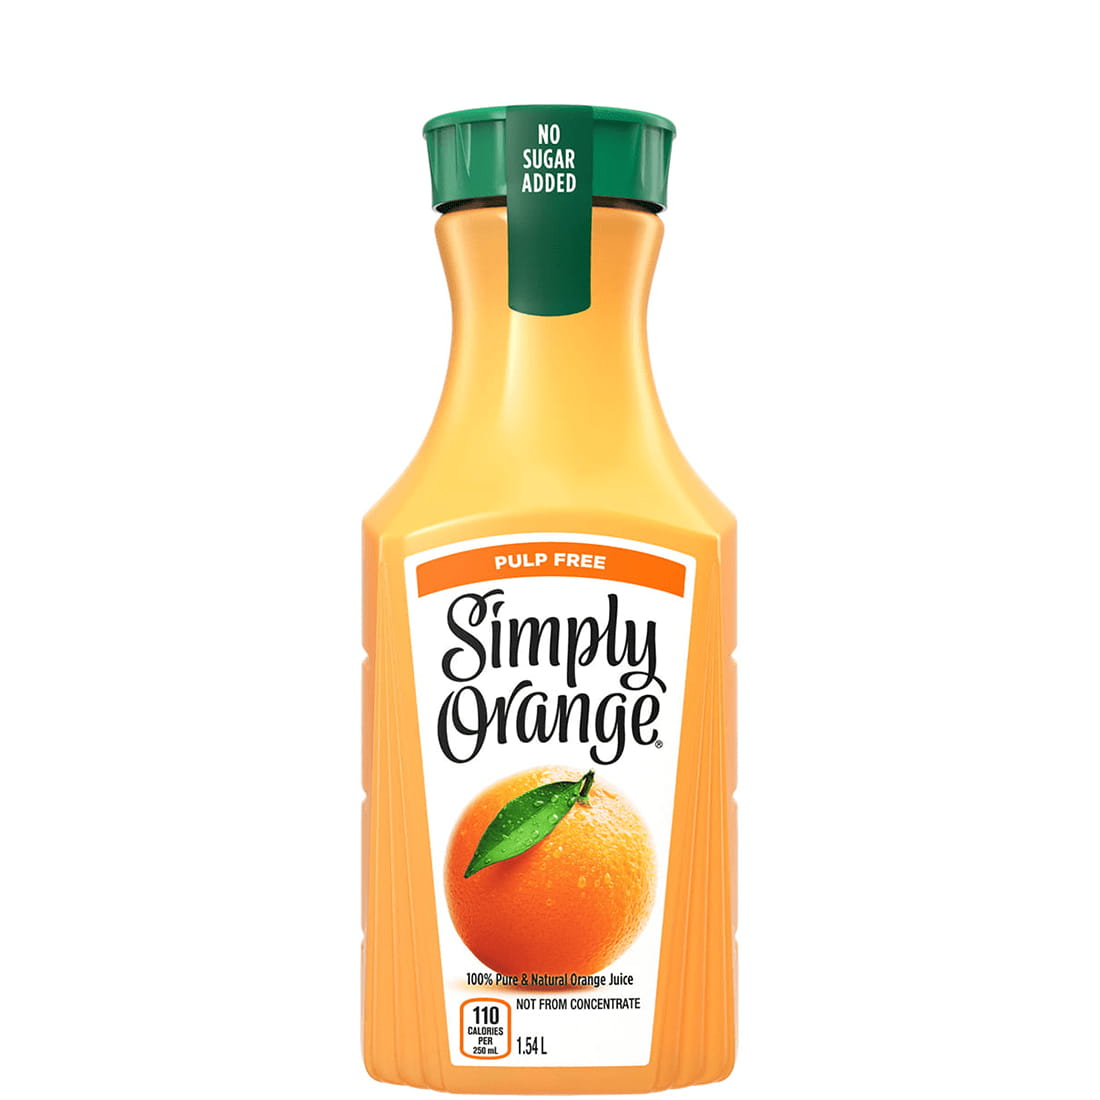 Simply Orange 1.54 L bottle